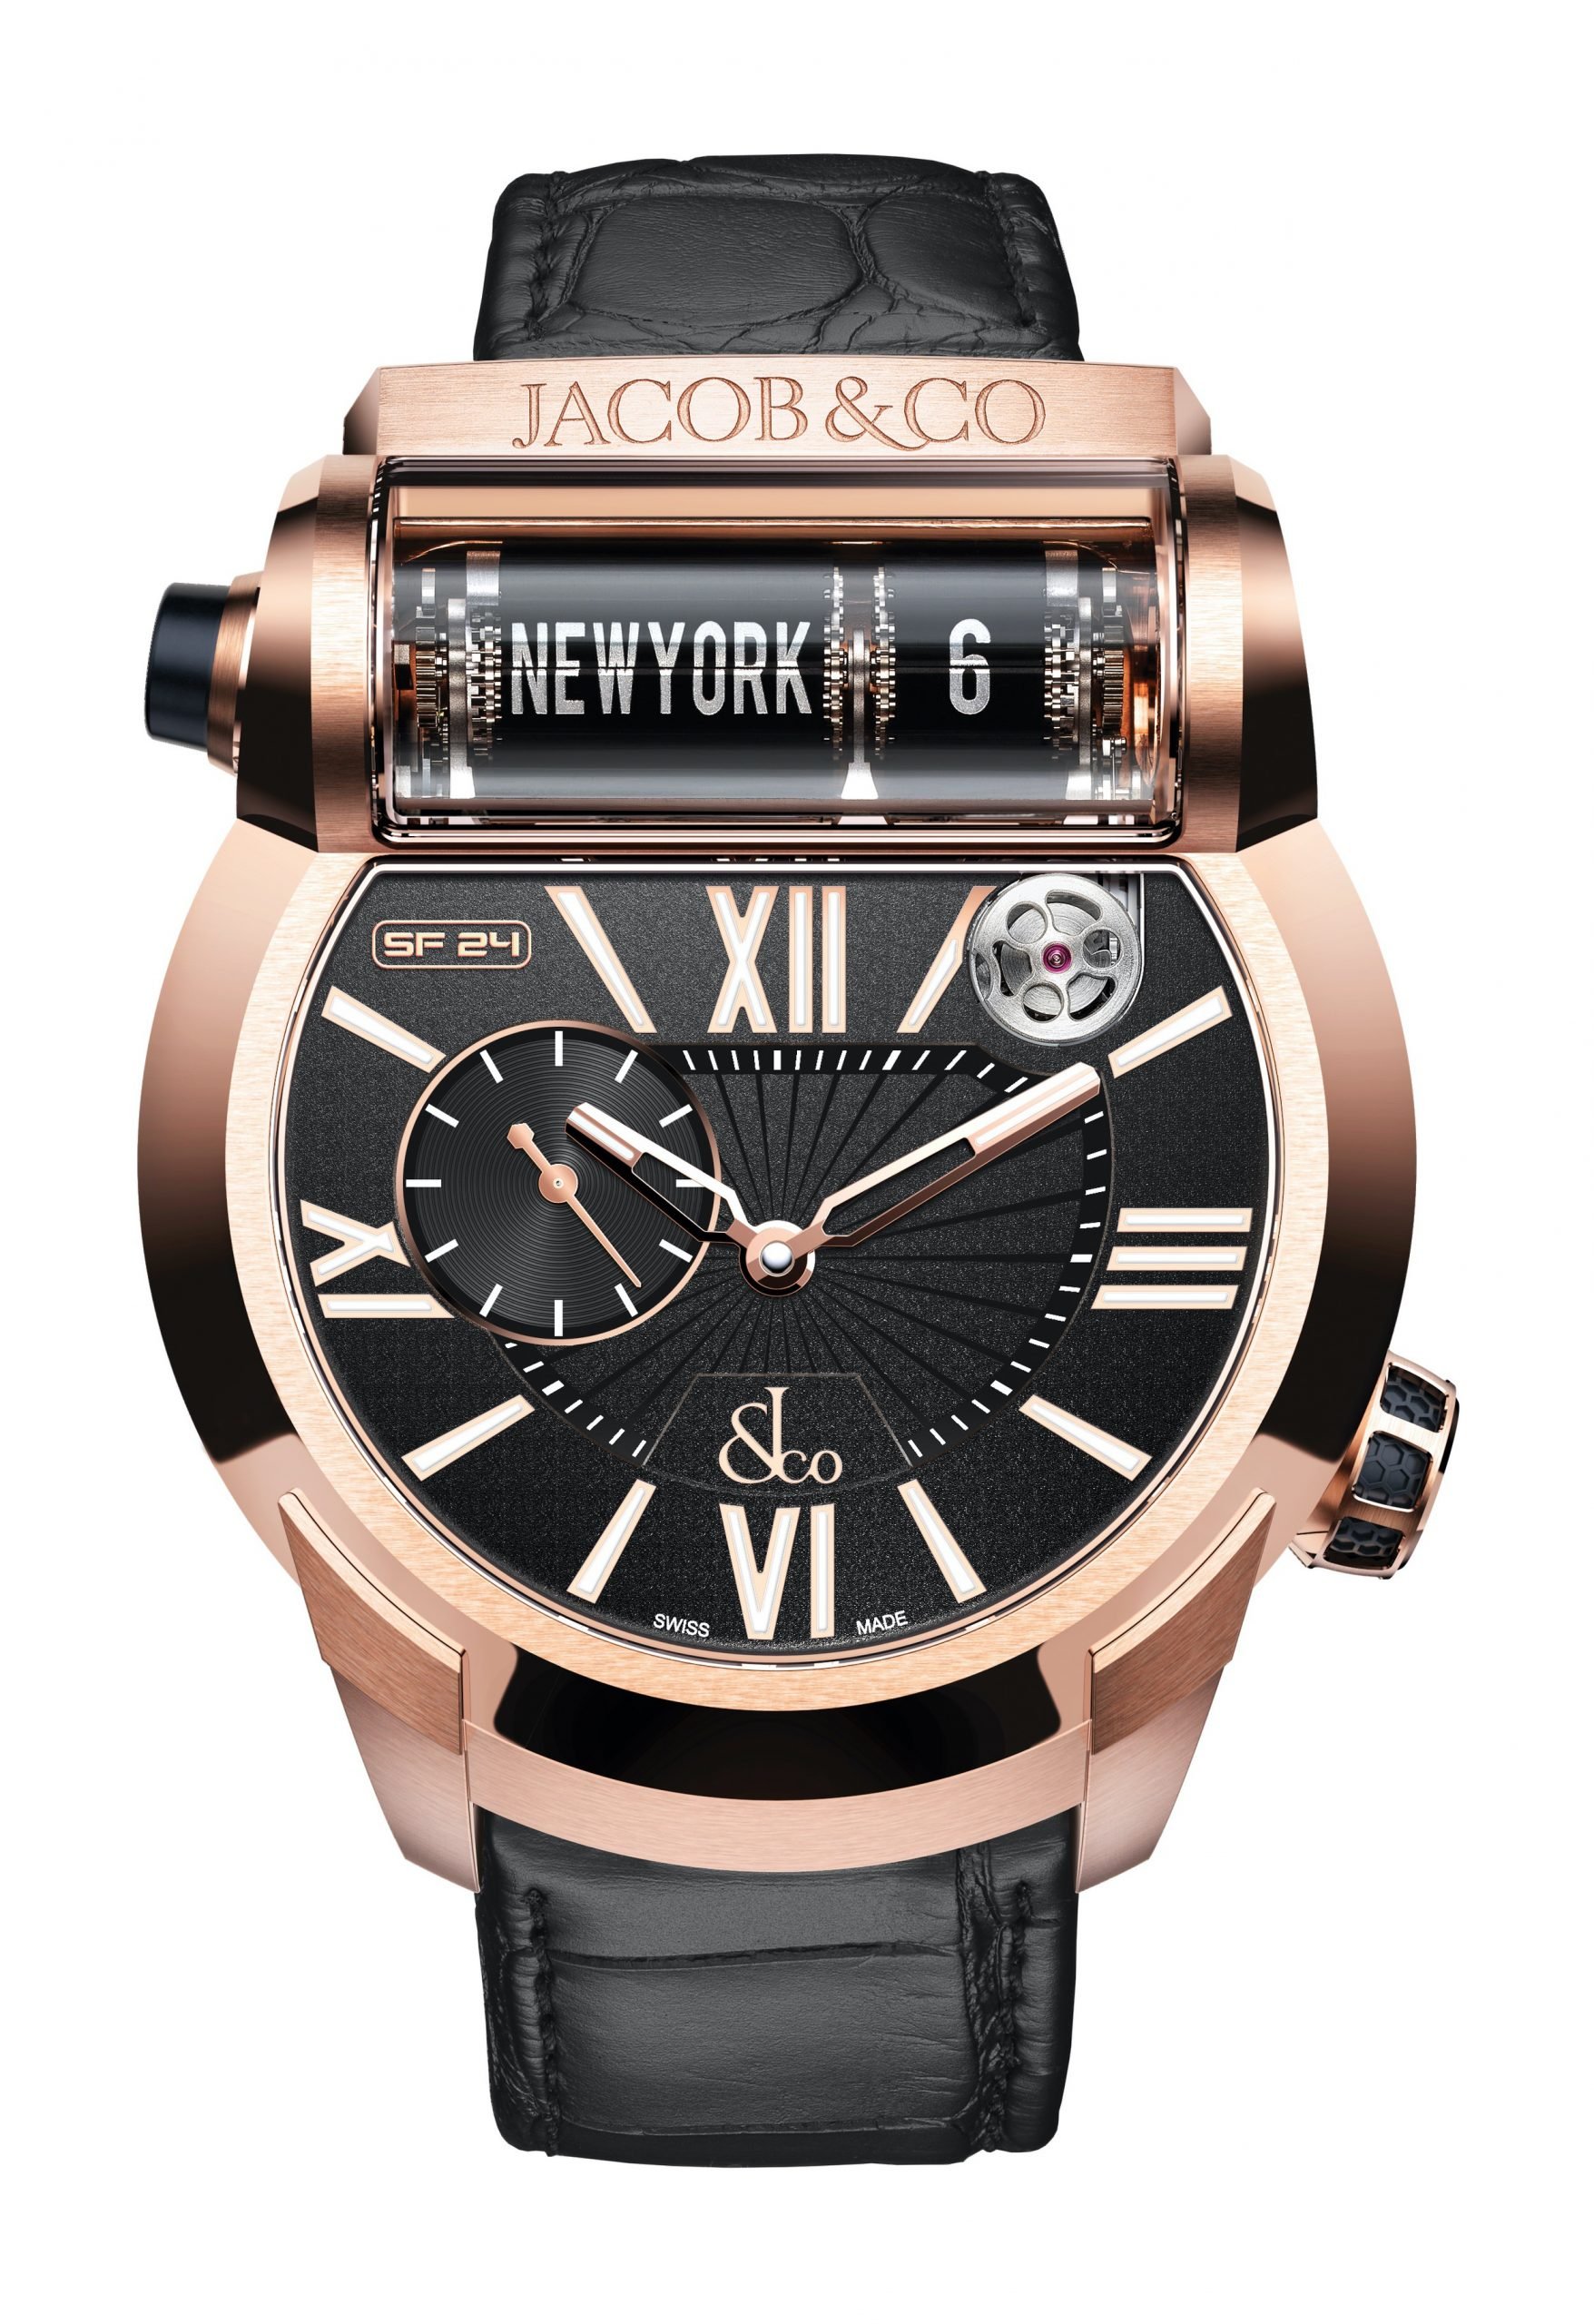 Jacob & Co Epic SF24 replica watch ES101.40.NS.LR.A